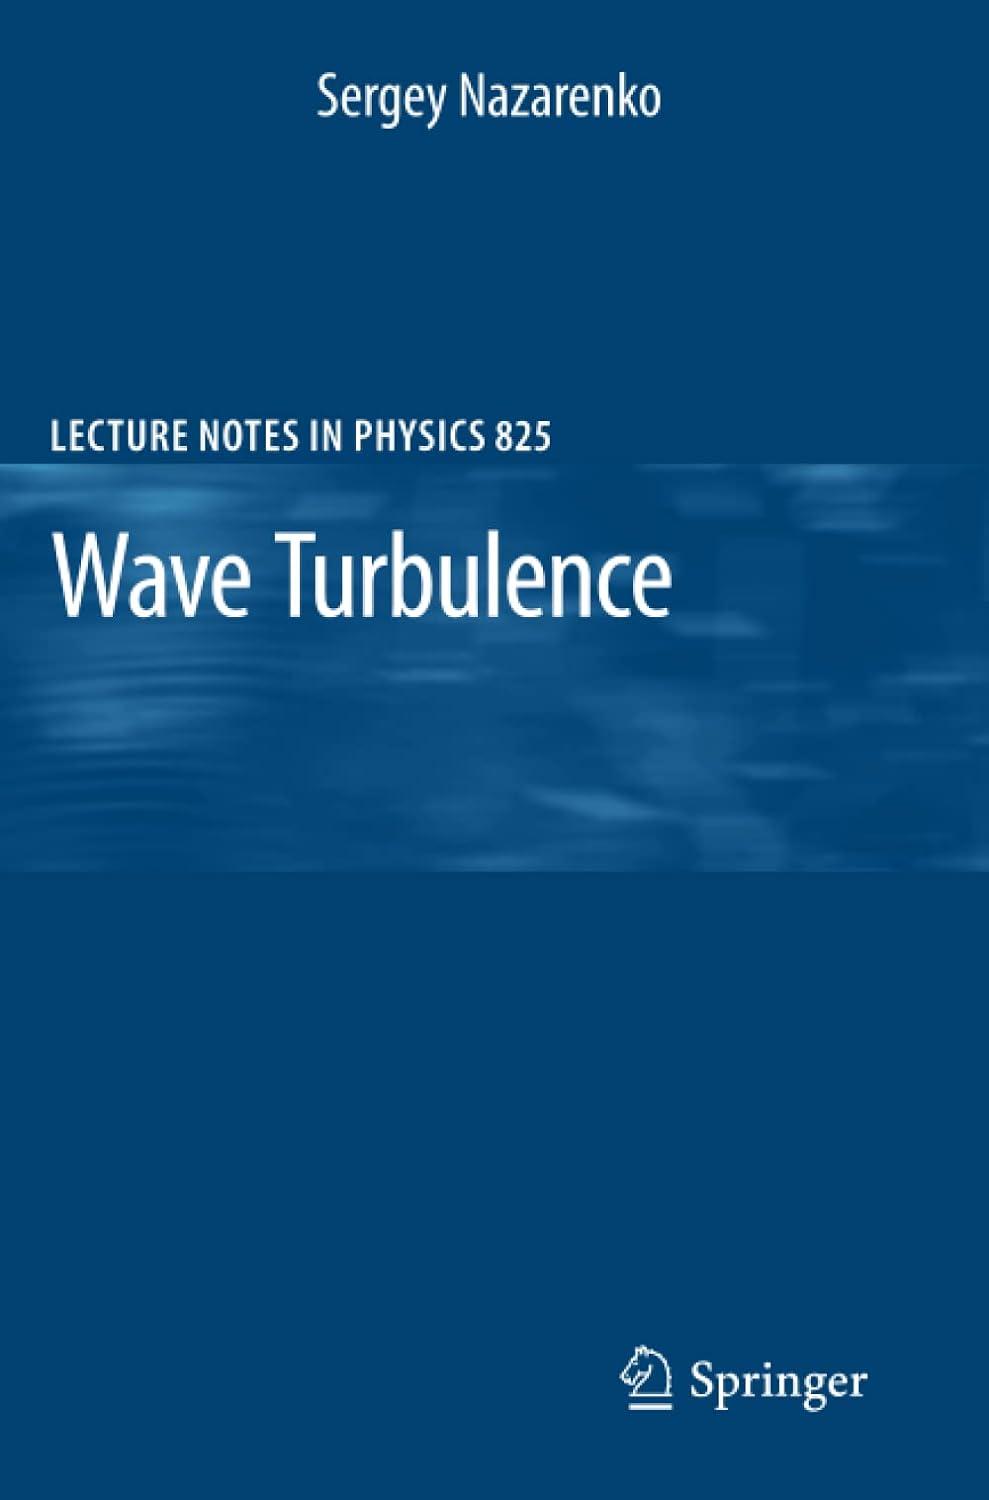 wave turbulence 1st edition sergey nazarenko 3642159419, 978-3642159411